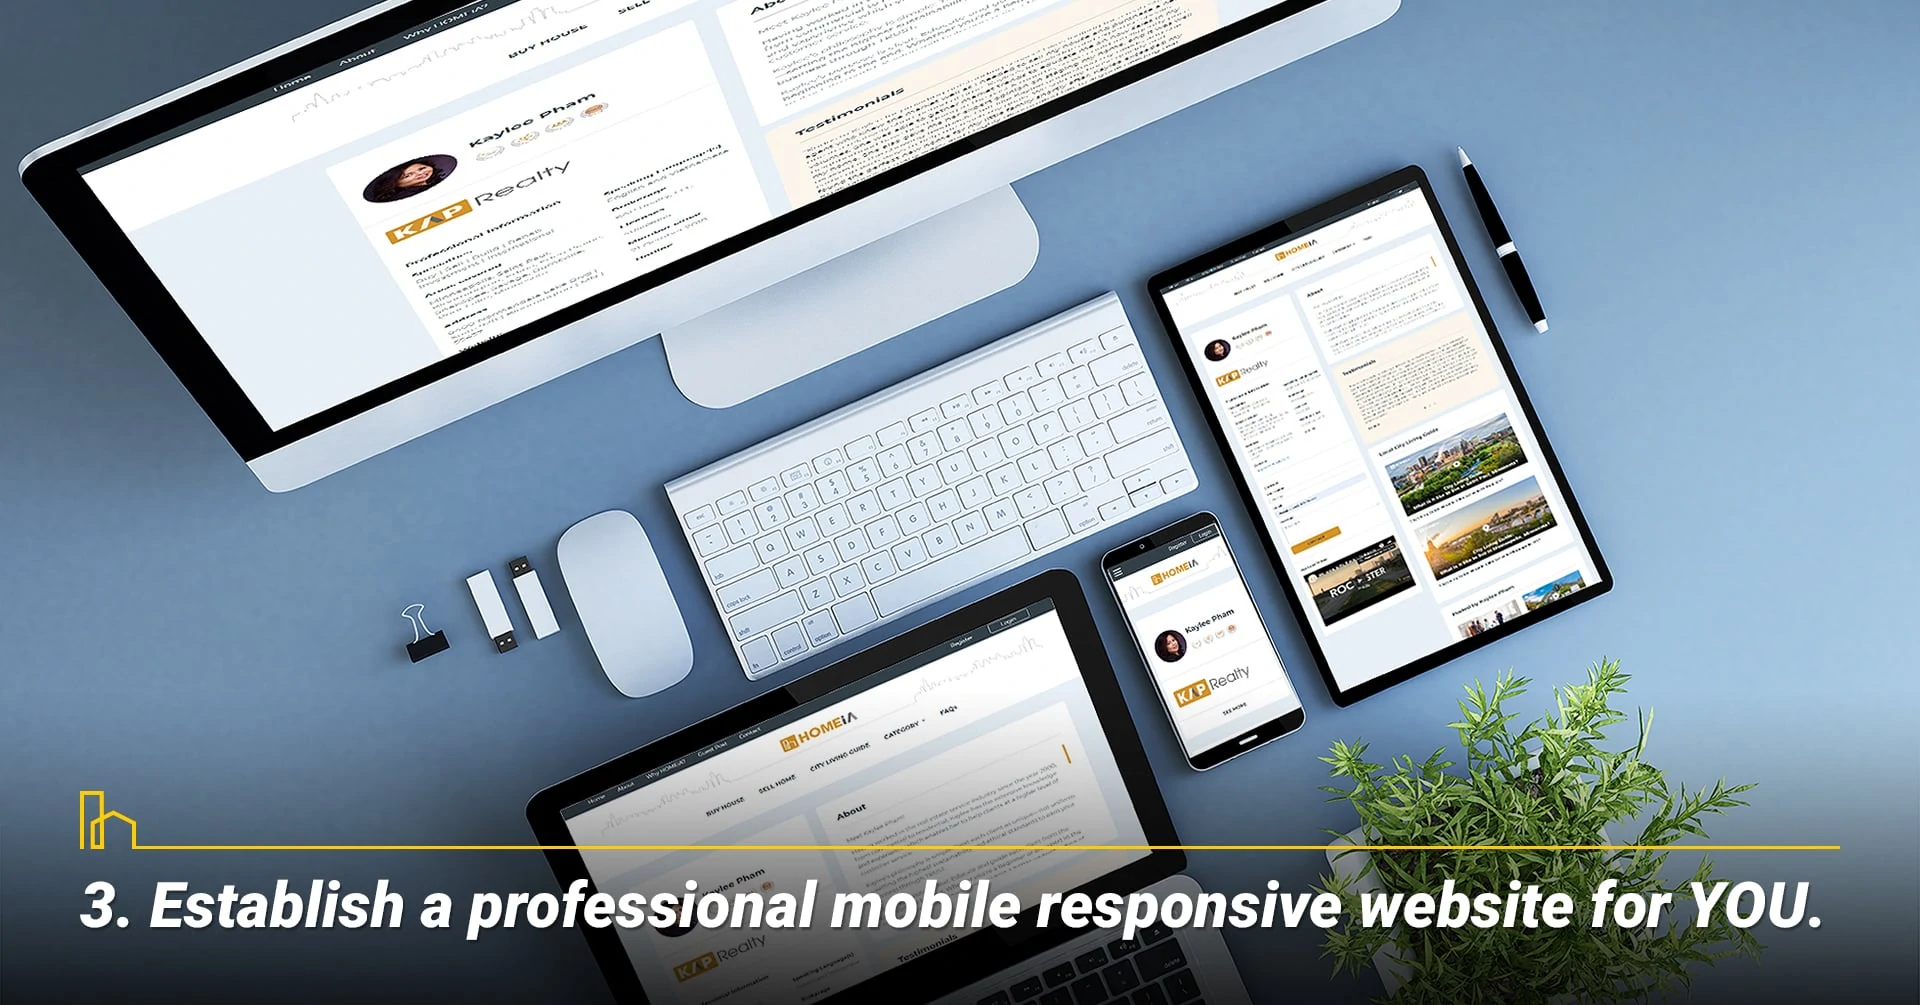 Establish a professional mobile responsive website for YOU, make your website responsive